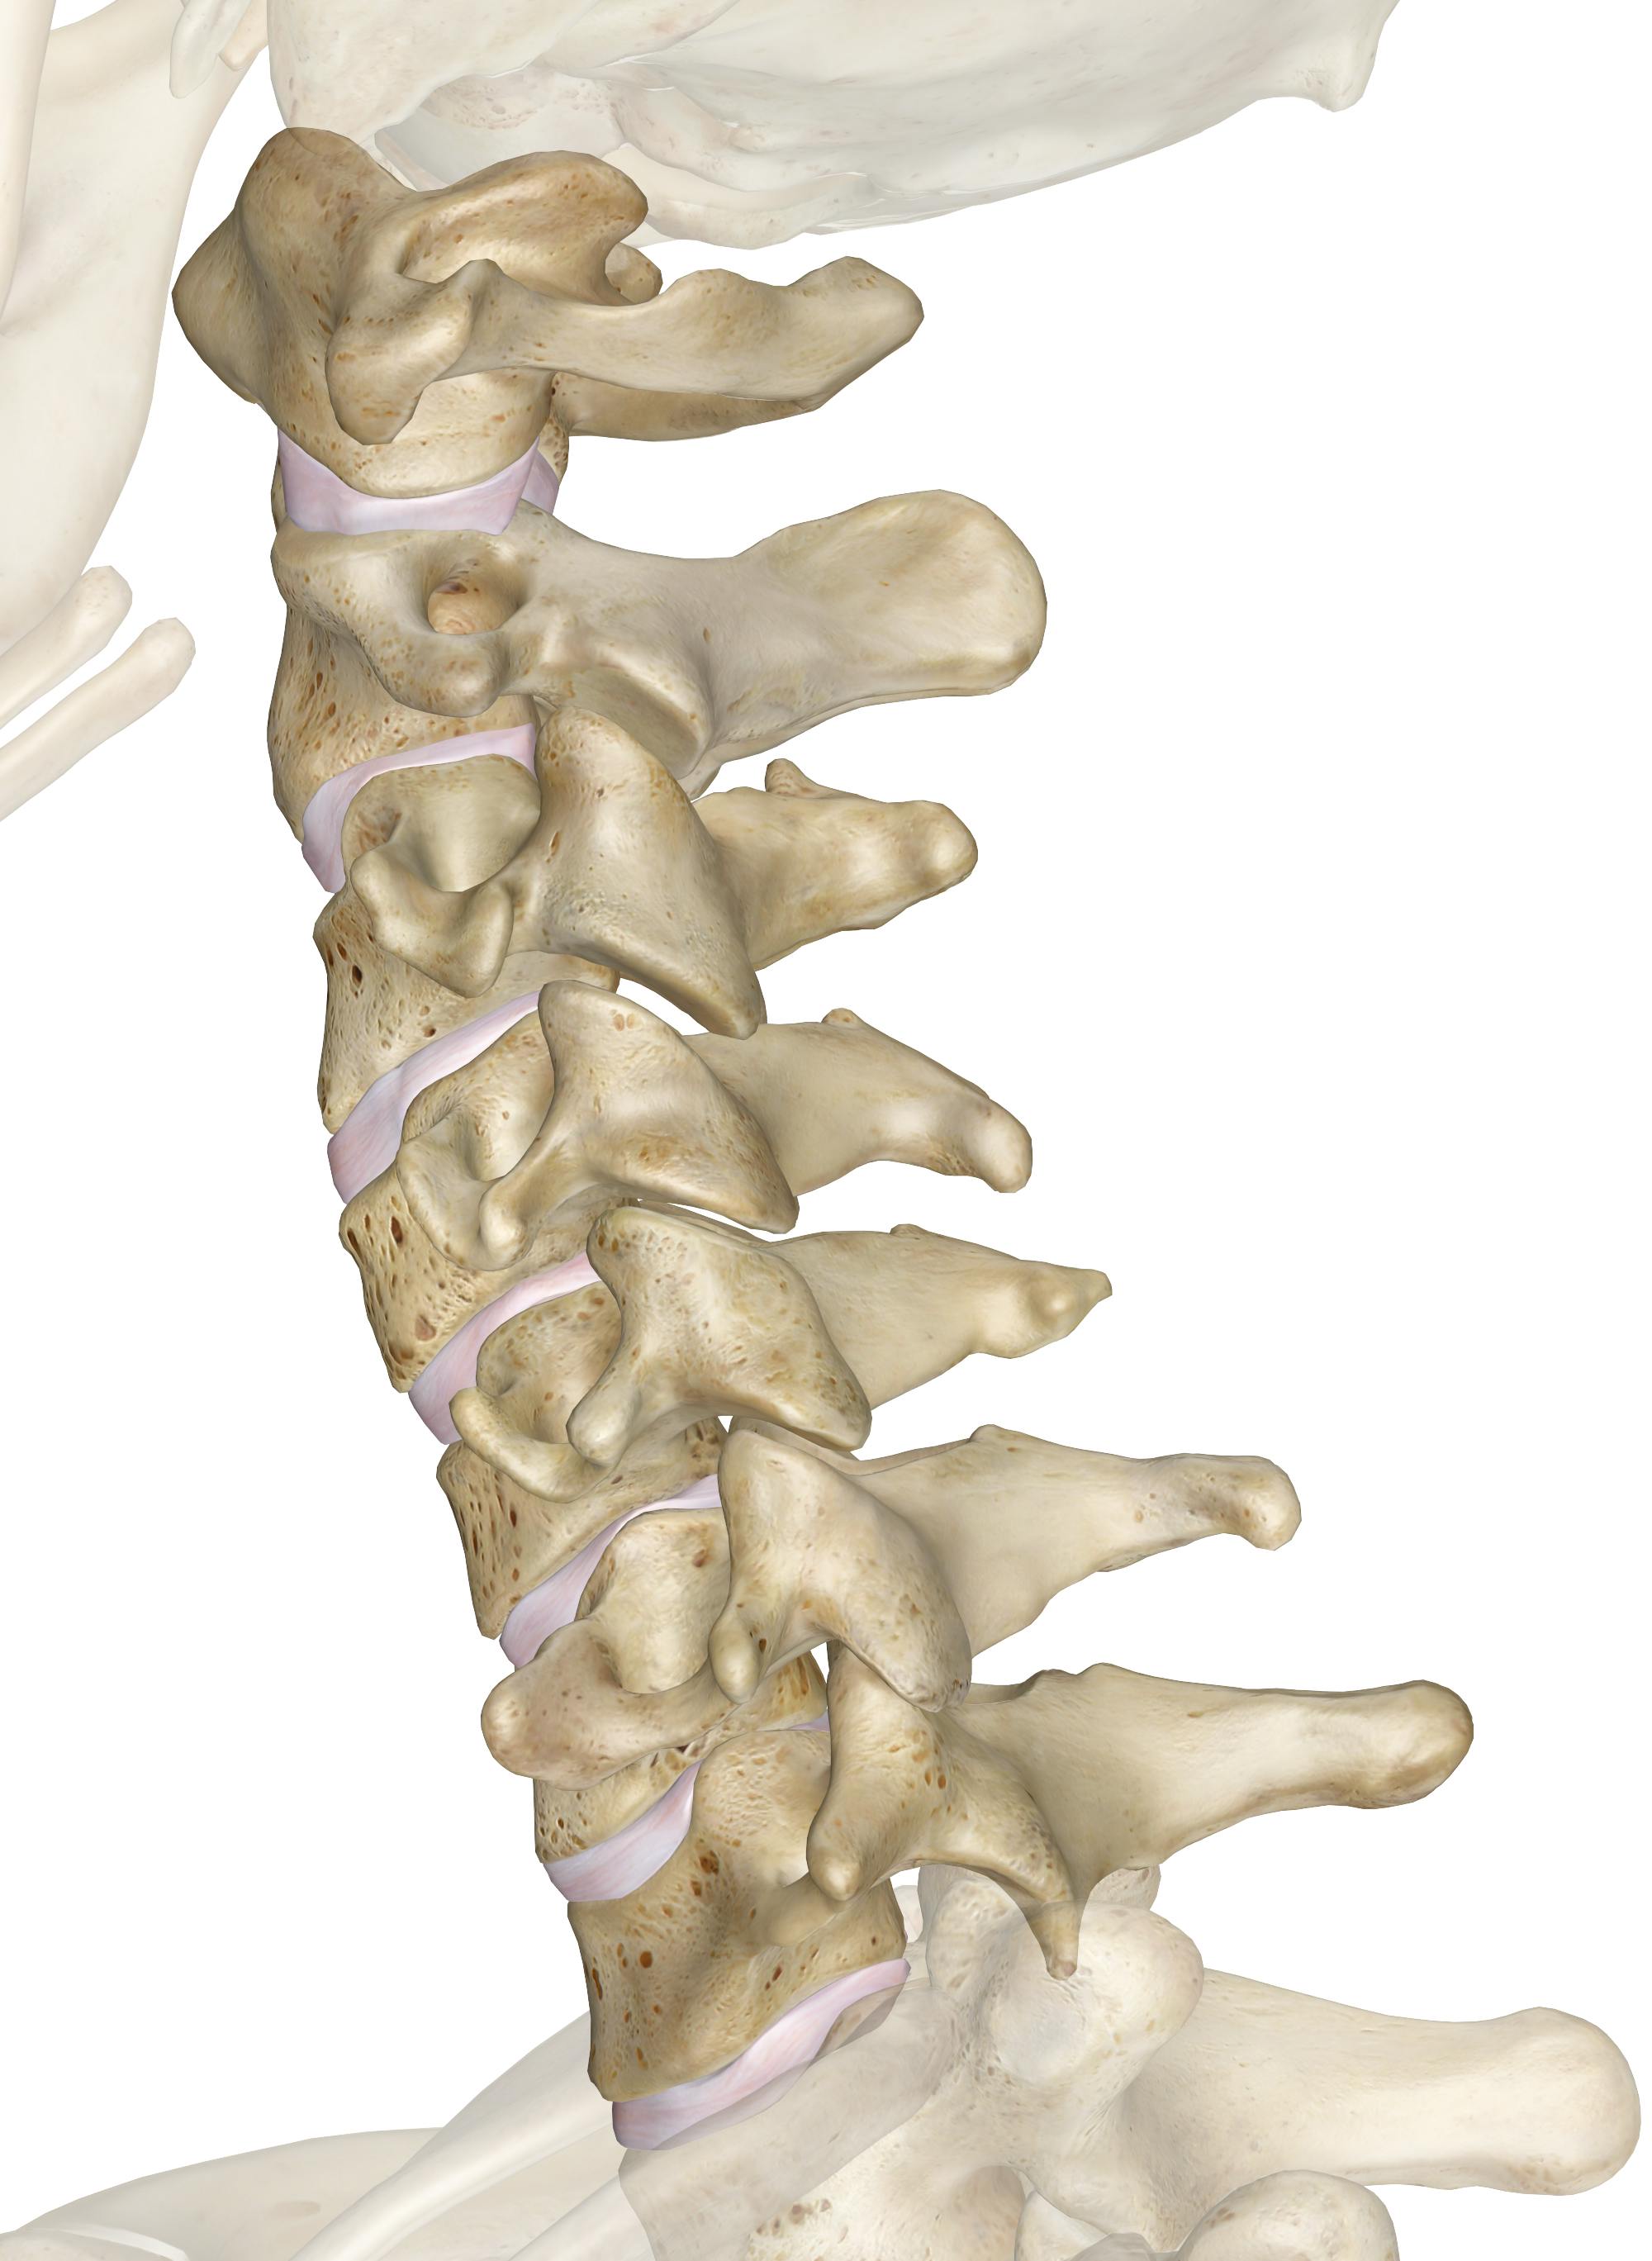 Fișier:Cervical vertebrae - close-up - animation.gif